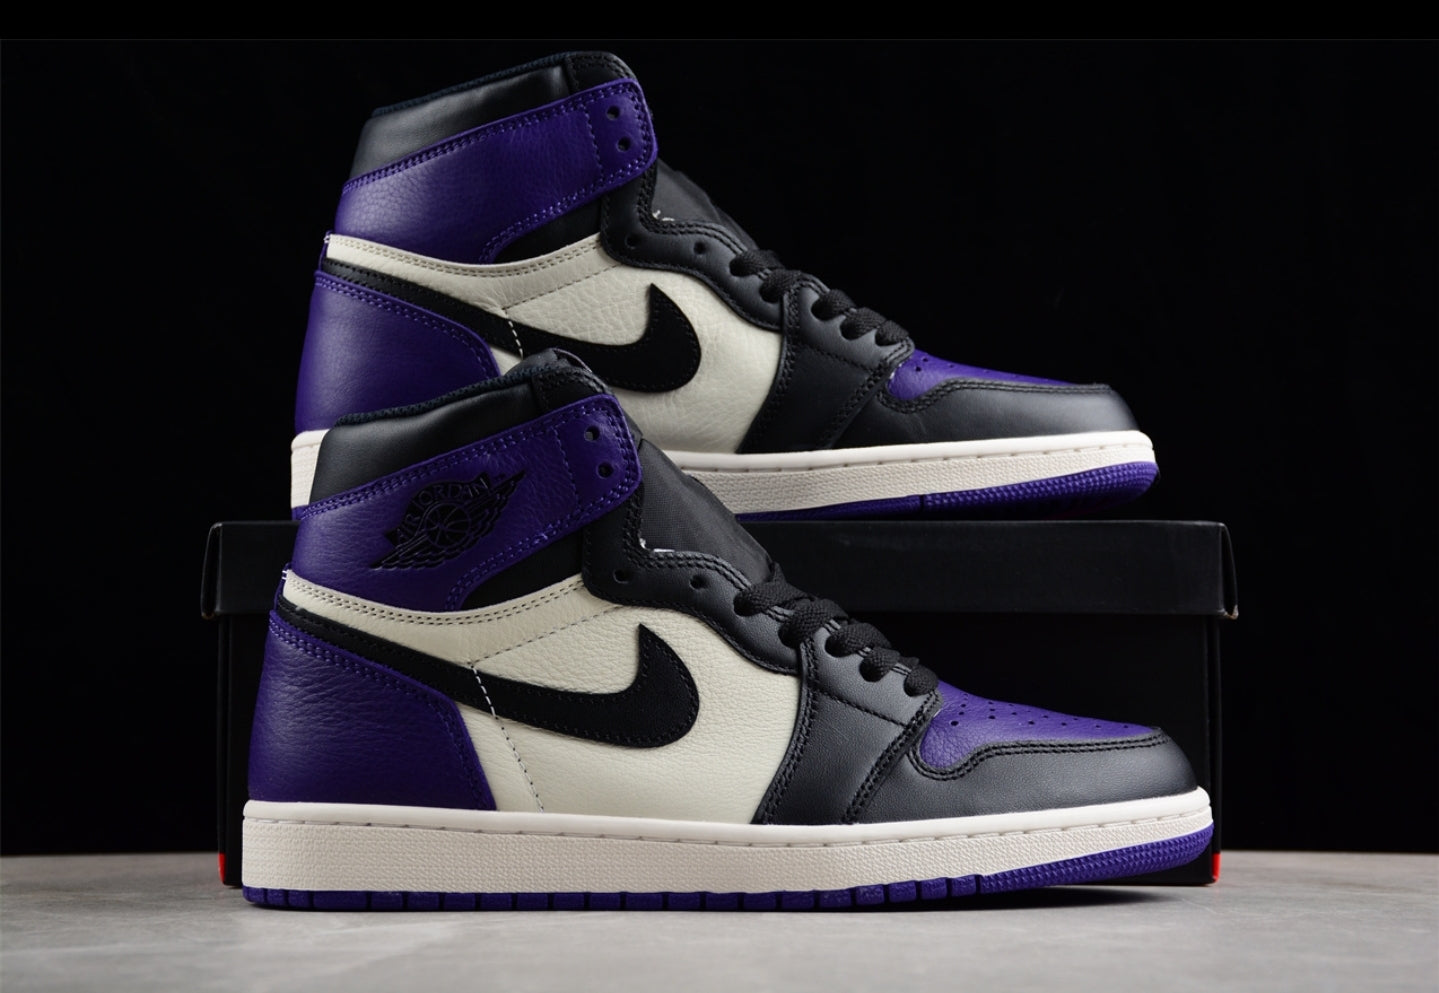 Jordan 1 High court purple